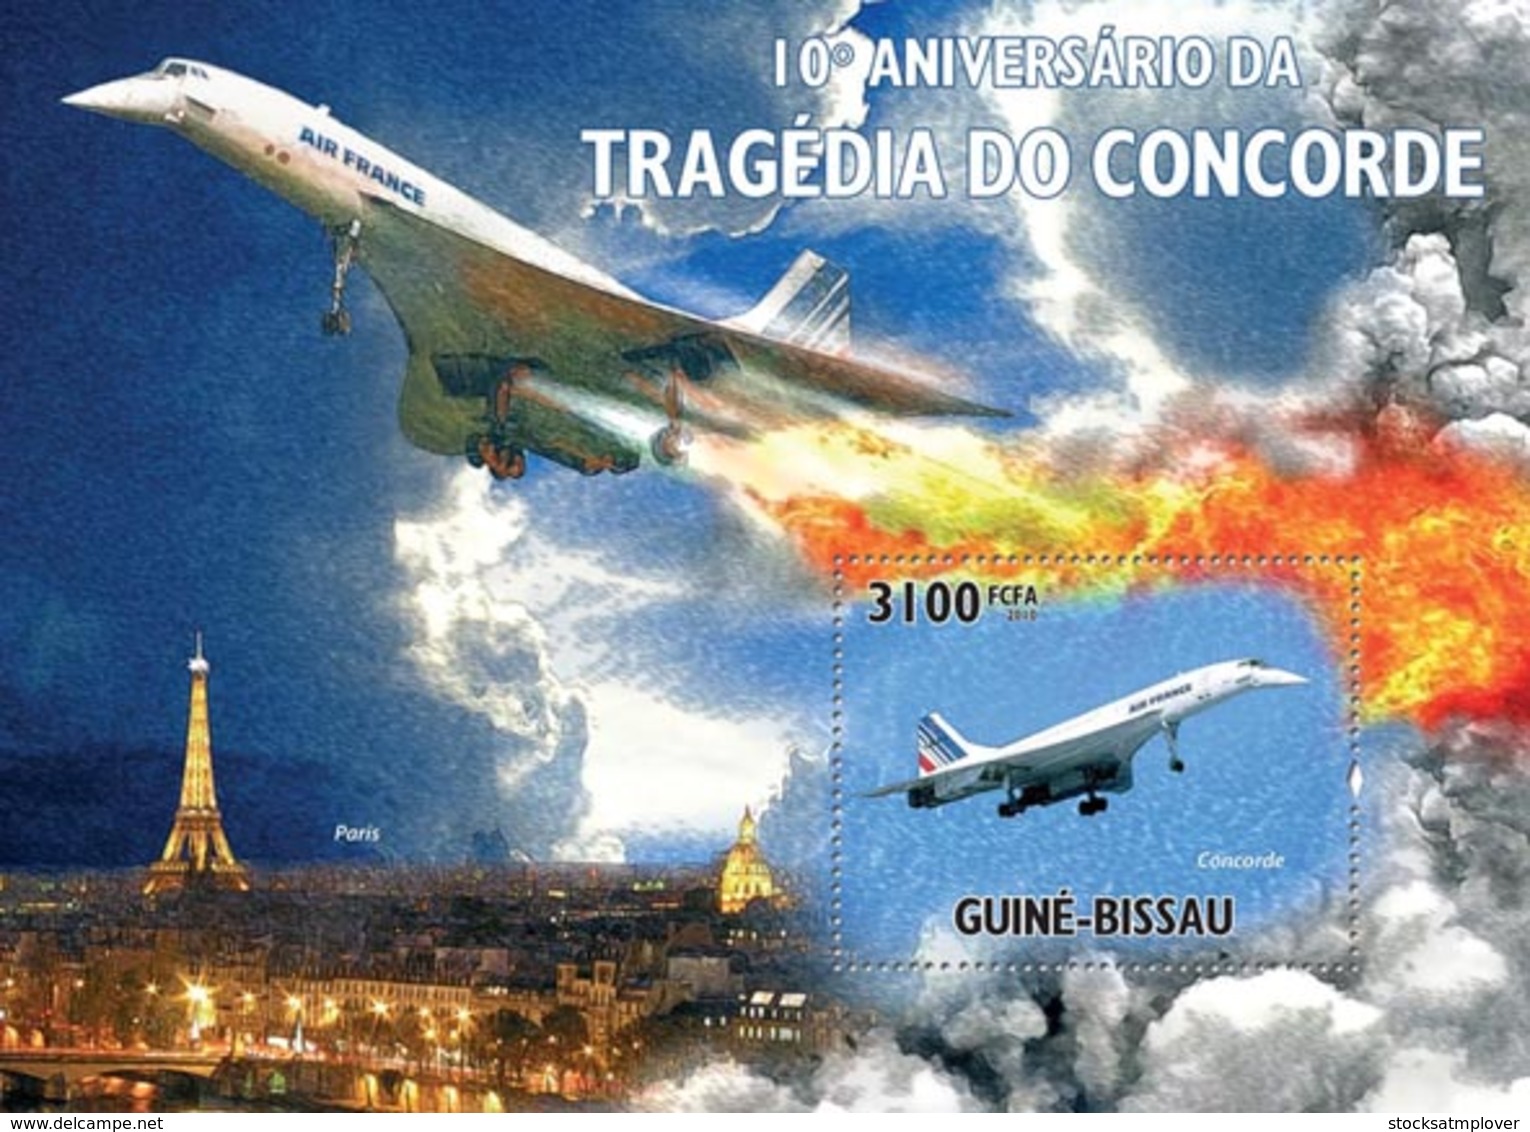 Guinea Bissau 2010 10th Anniversary Concorde Tragedy - Guinea-Bissau